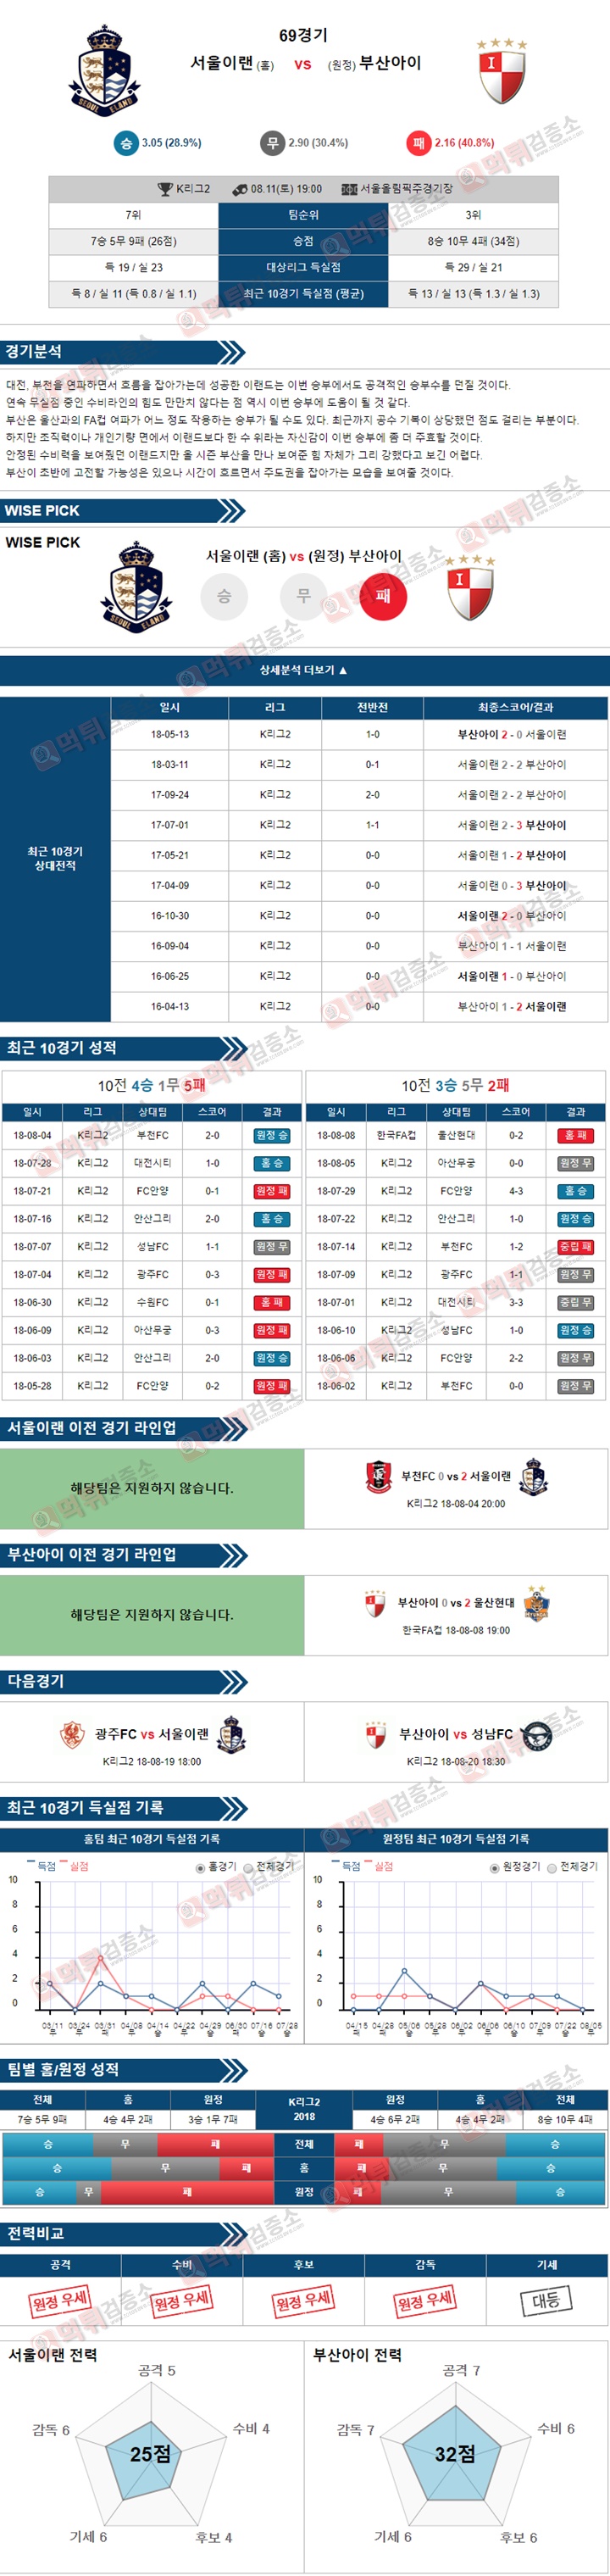 K리그2 8월11일 서울이랜 vs 부산아이 먹튀 검증소 분석픽